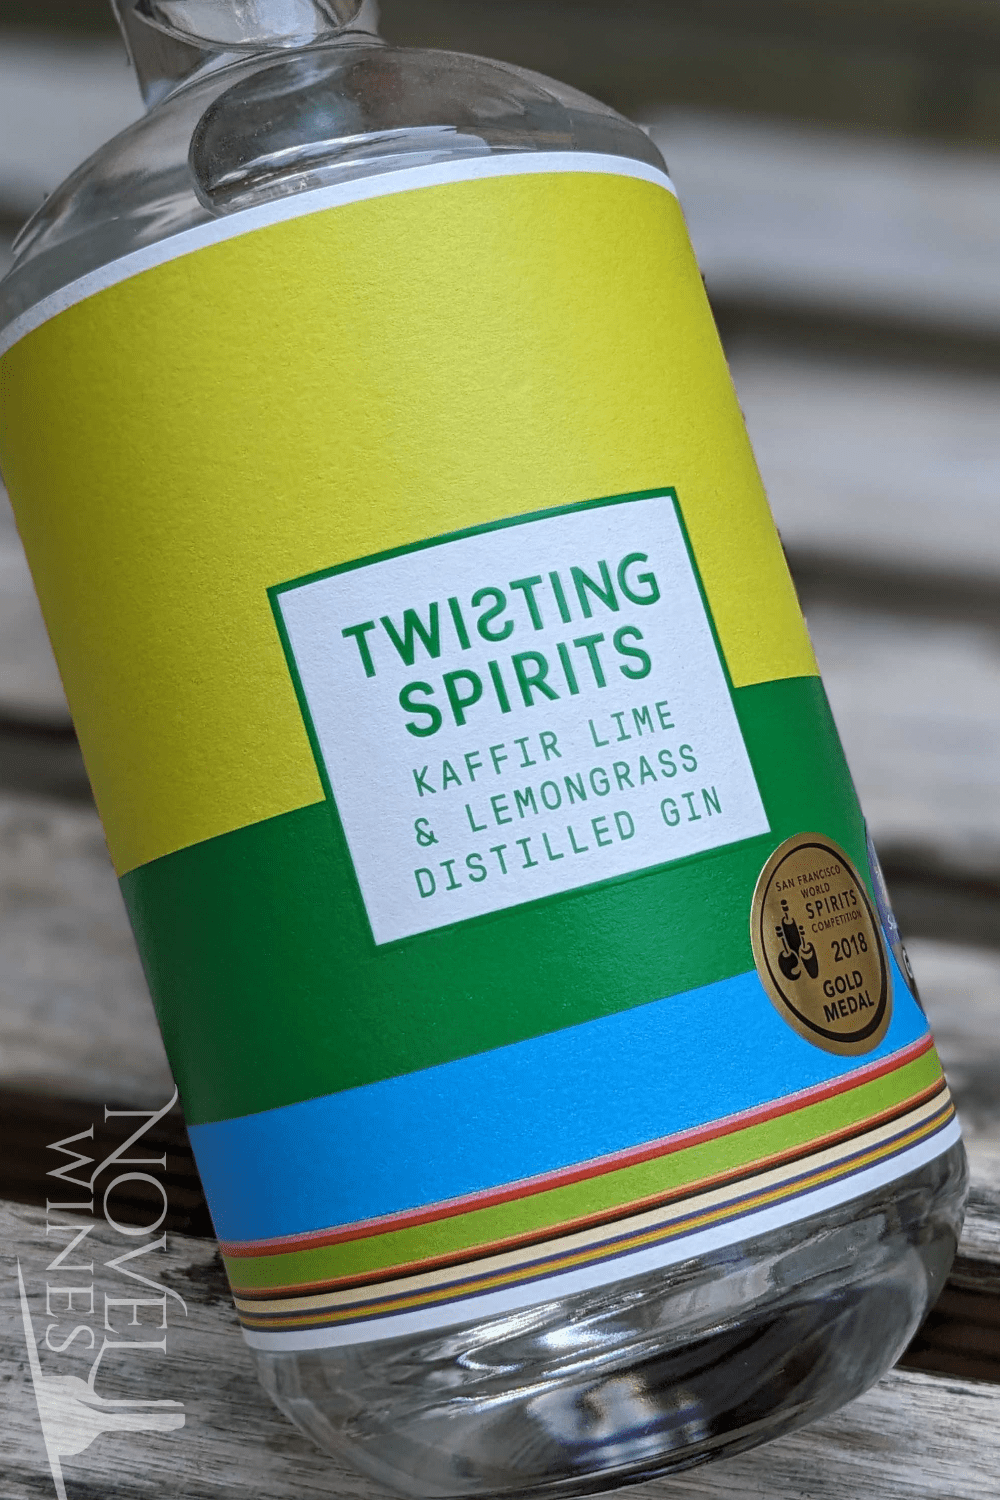 Twisting Spirits Gin Twisting Spirits Kaffir Lime & Lemongrass Gin 41.4% abv, England